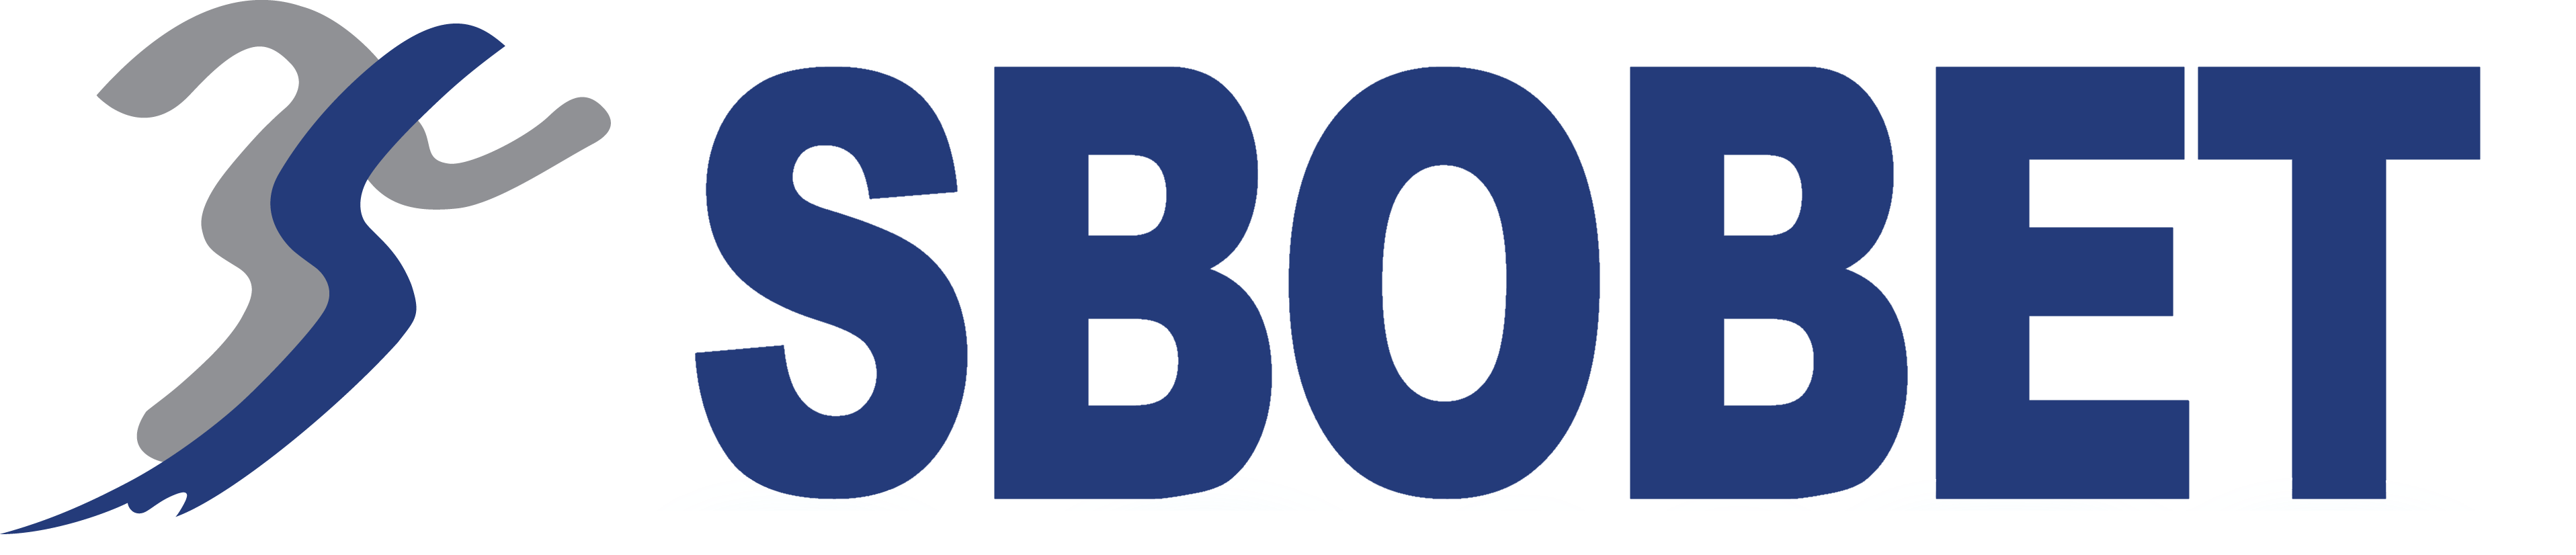 Sbobet-logo.png